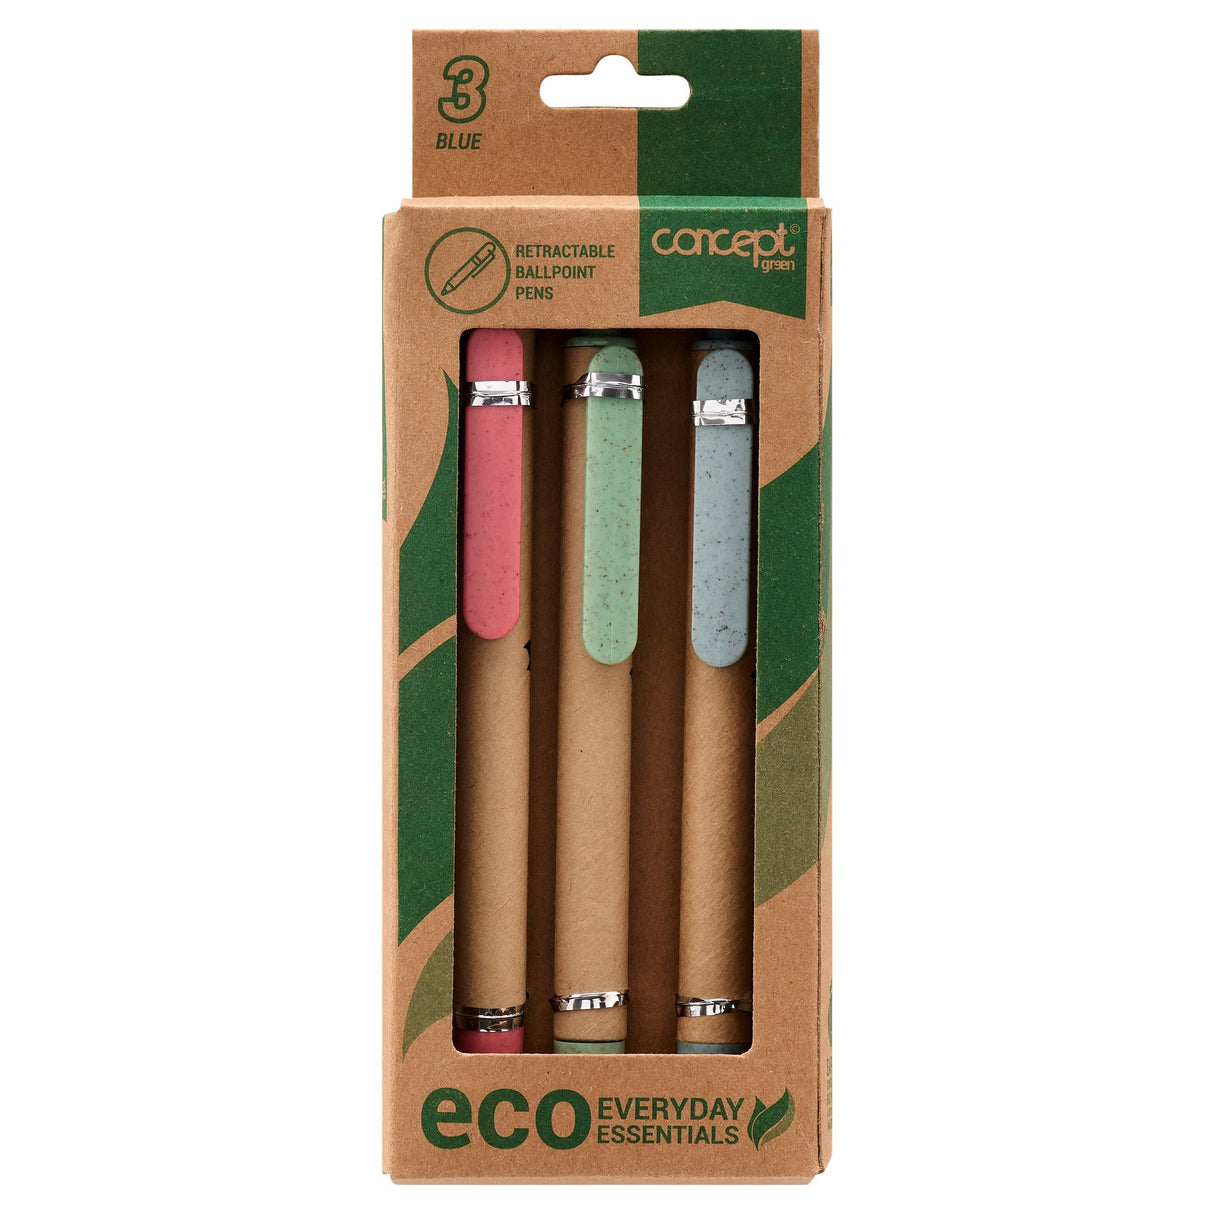 Concept Green Retractable Ballpoint Pens - Pack of 3-Ballpoint Pens-Concept Green|StationeryShop.co.uk